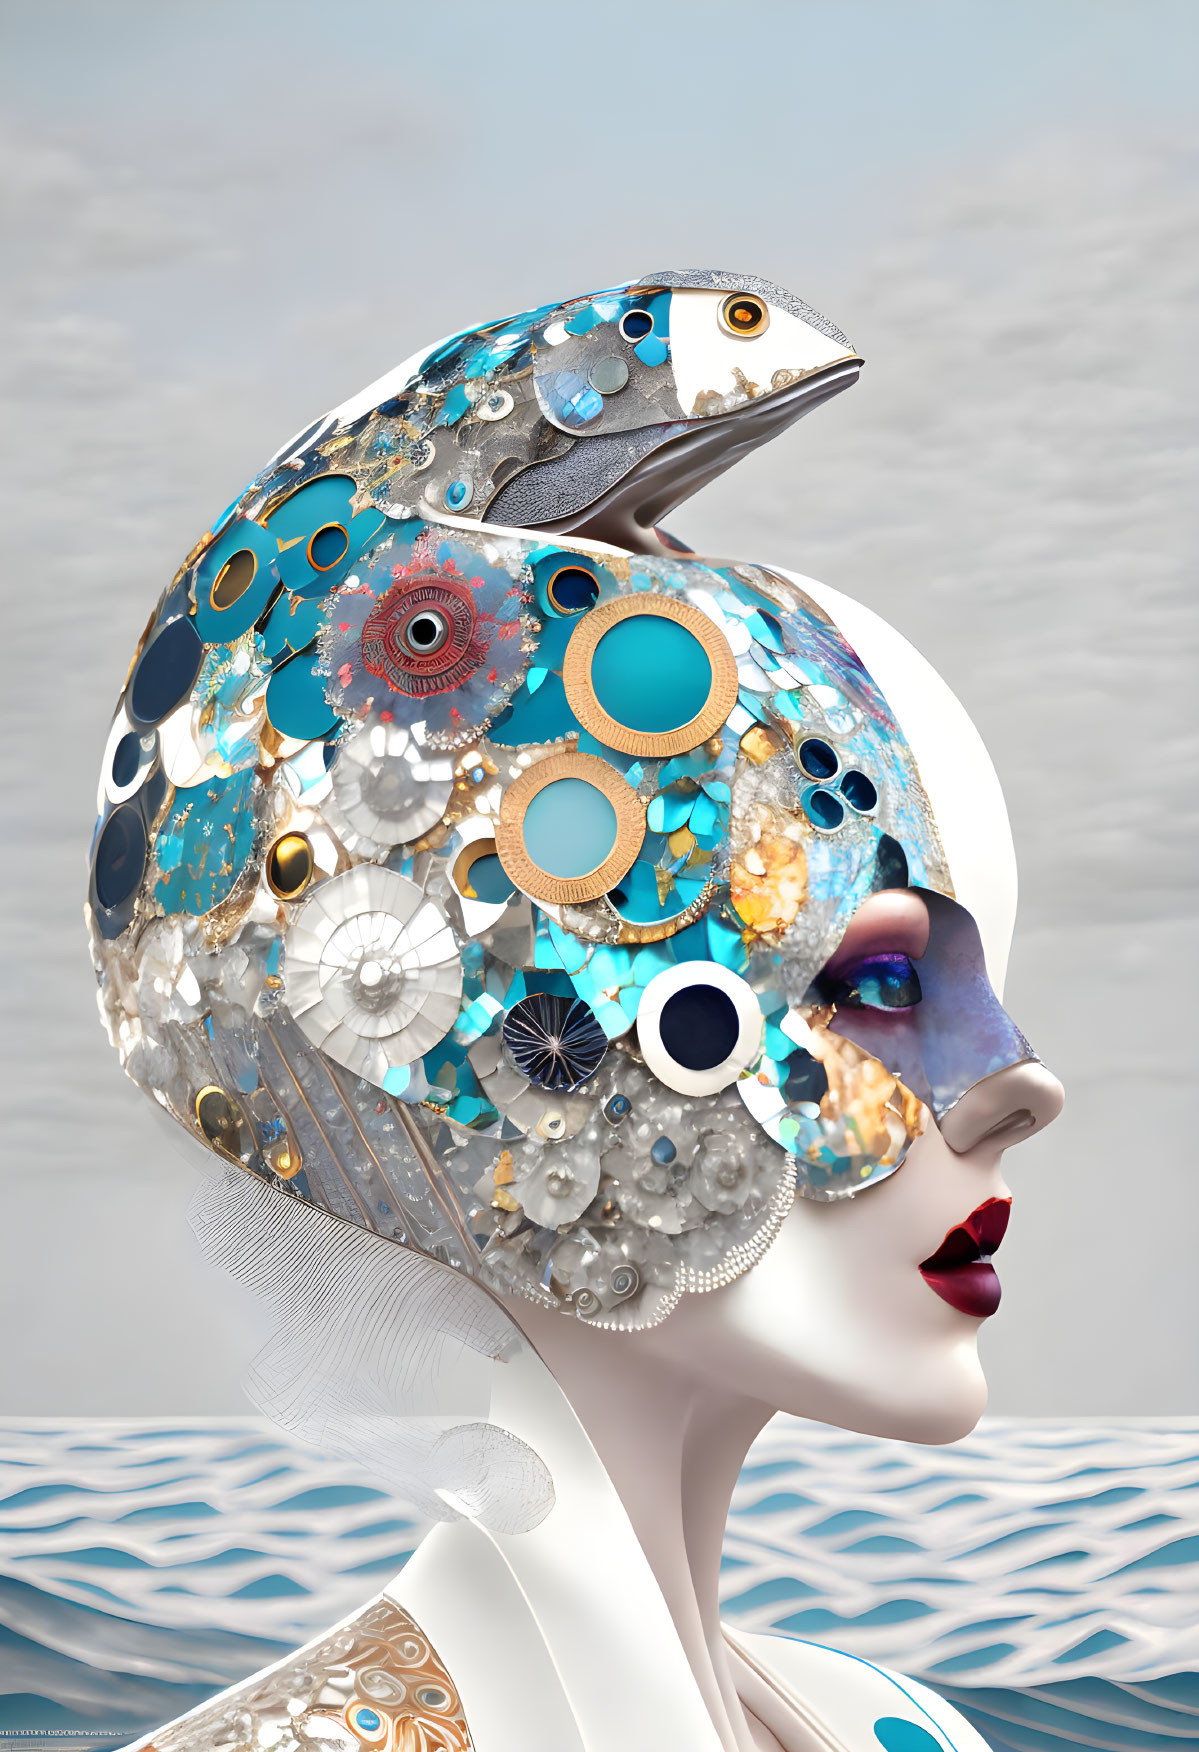 Surreal portrait of female figure with half-mechanical fish head